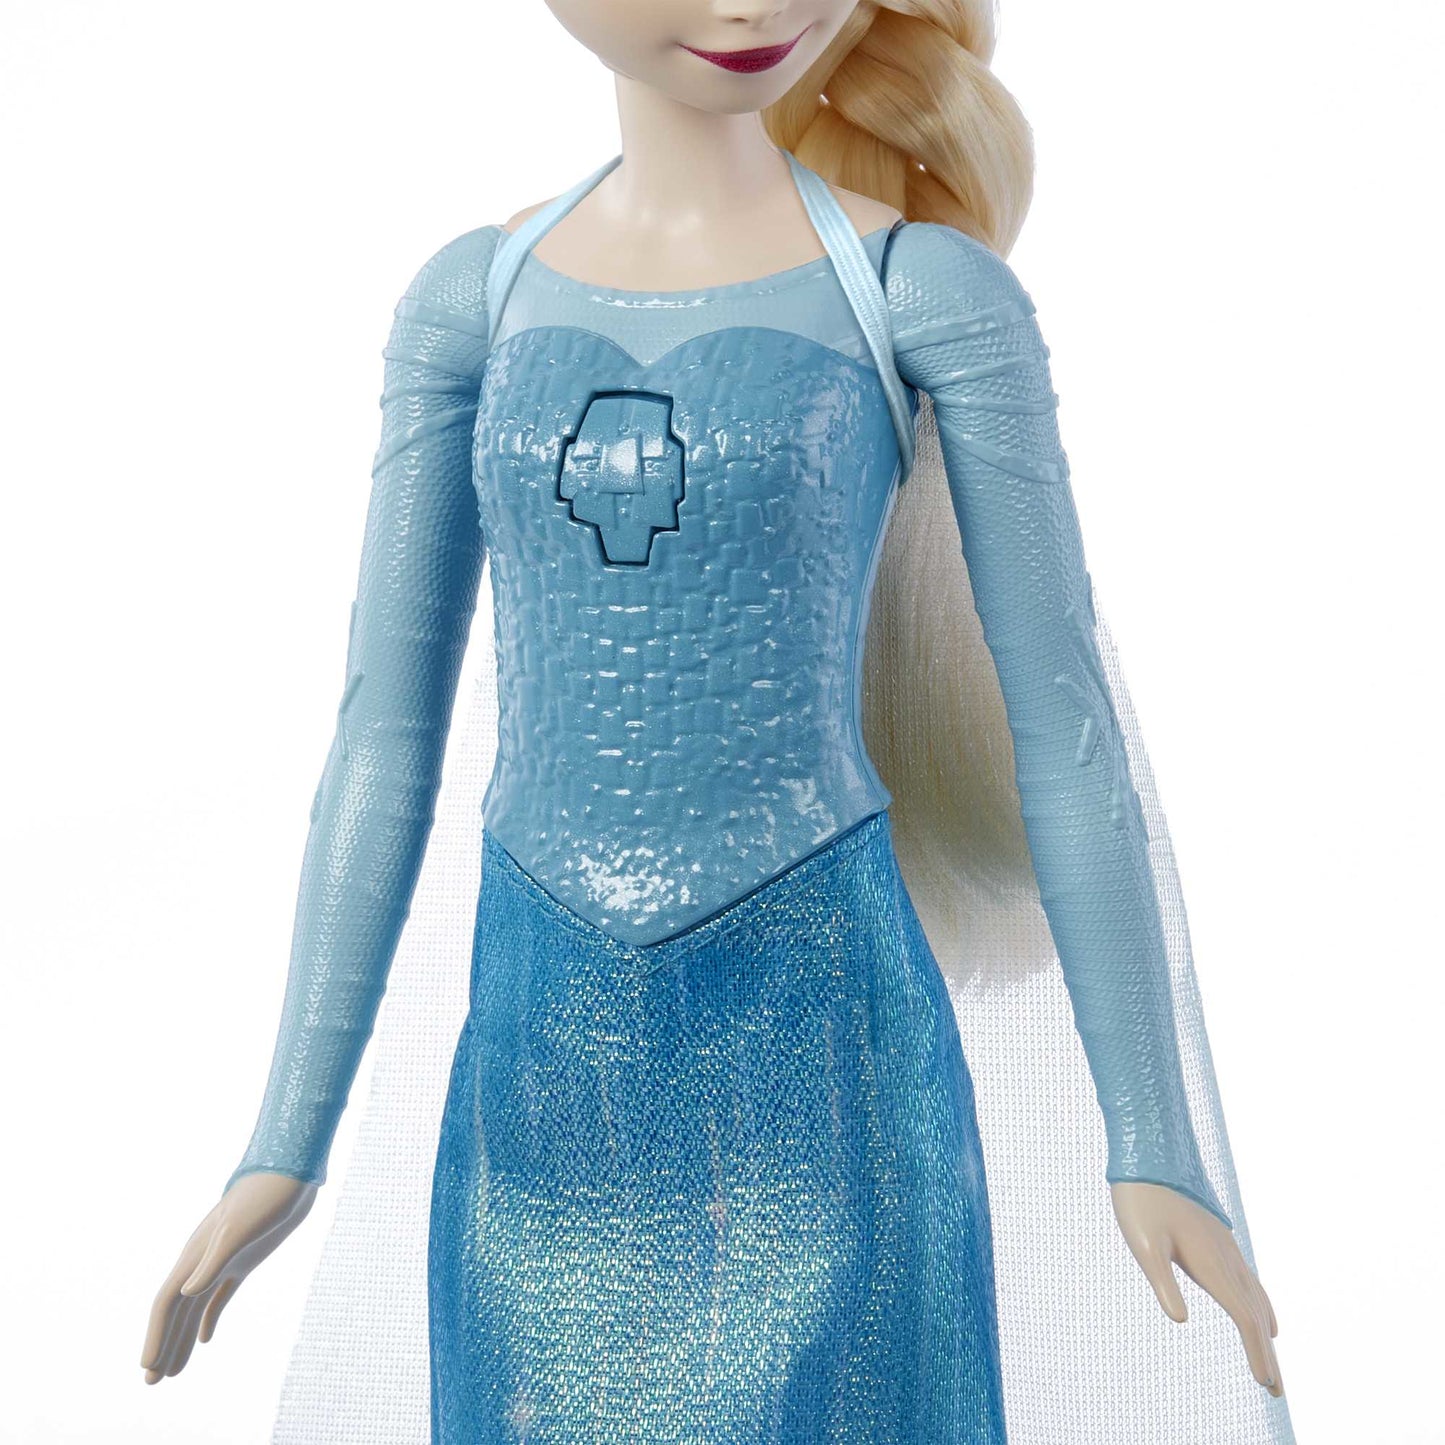 Disney Frost Musical Elsa Docka